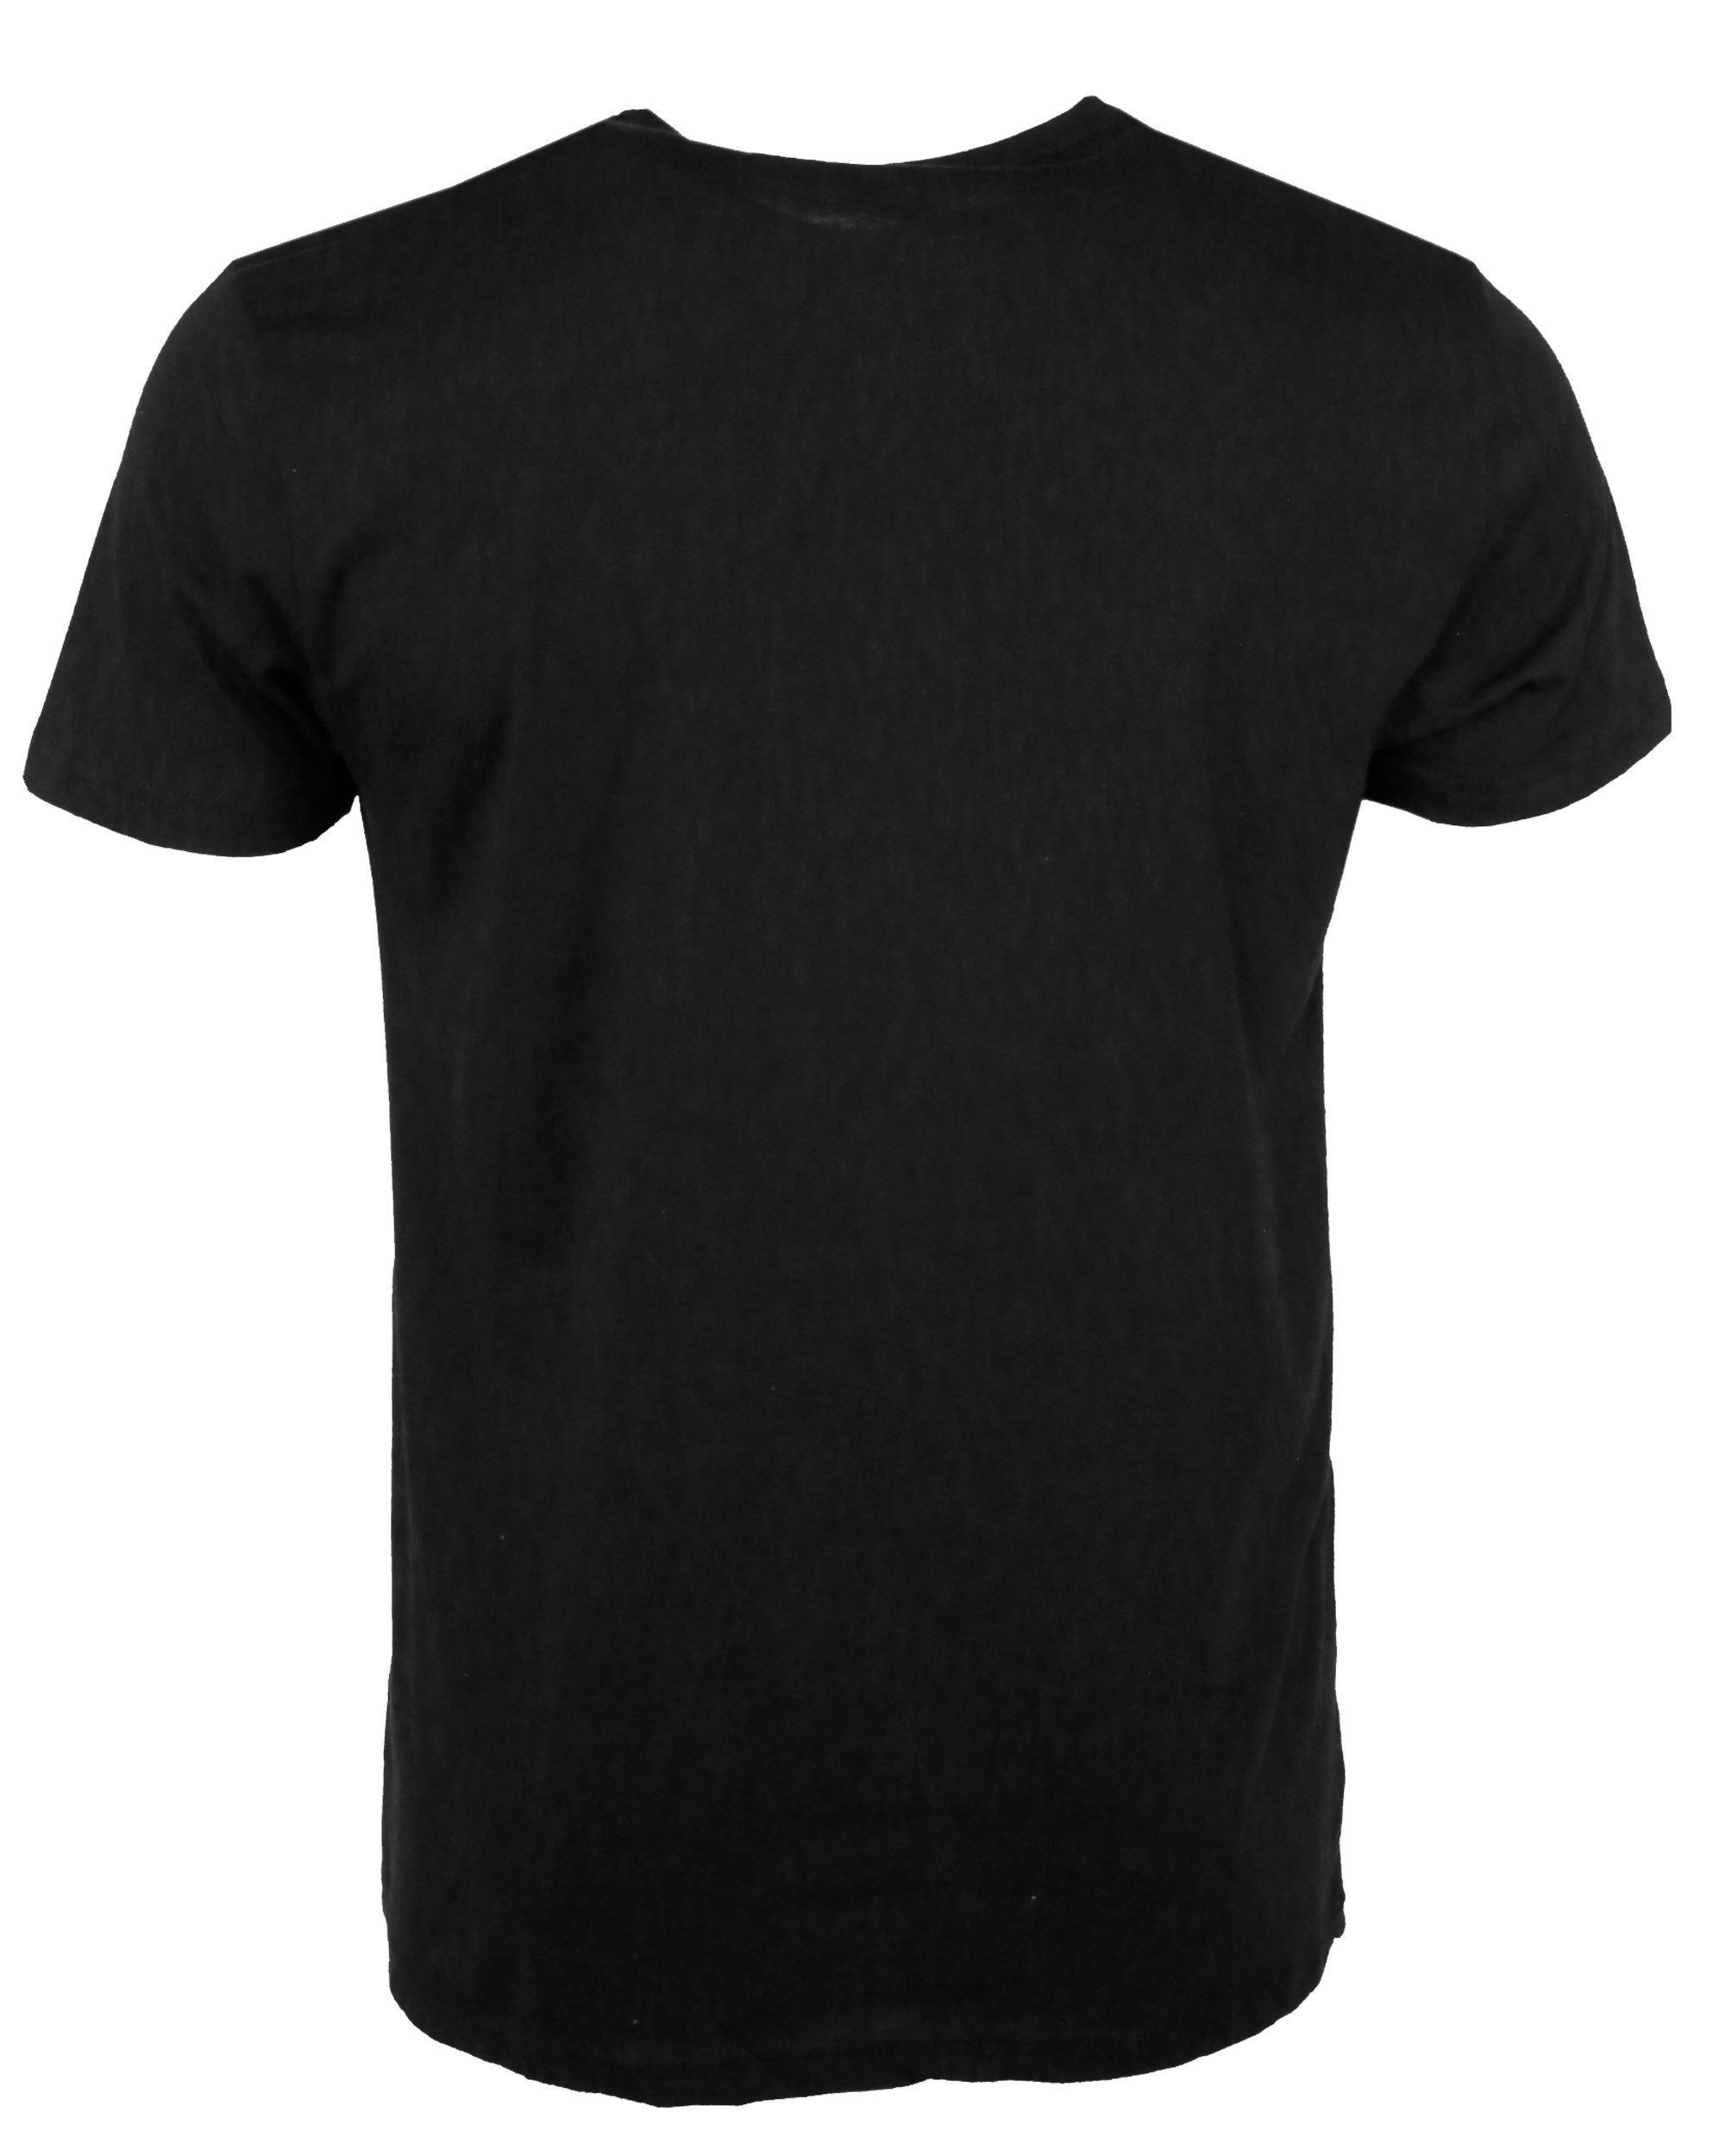 TG20212016 black T-Shirt GUN TOP